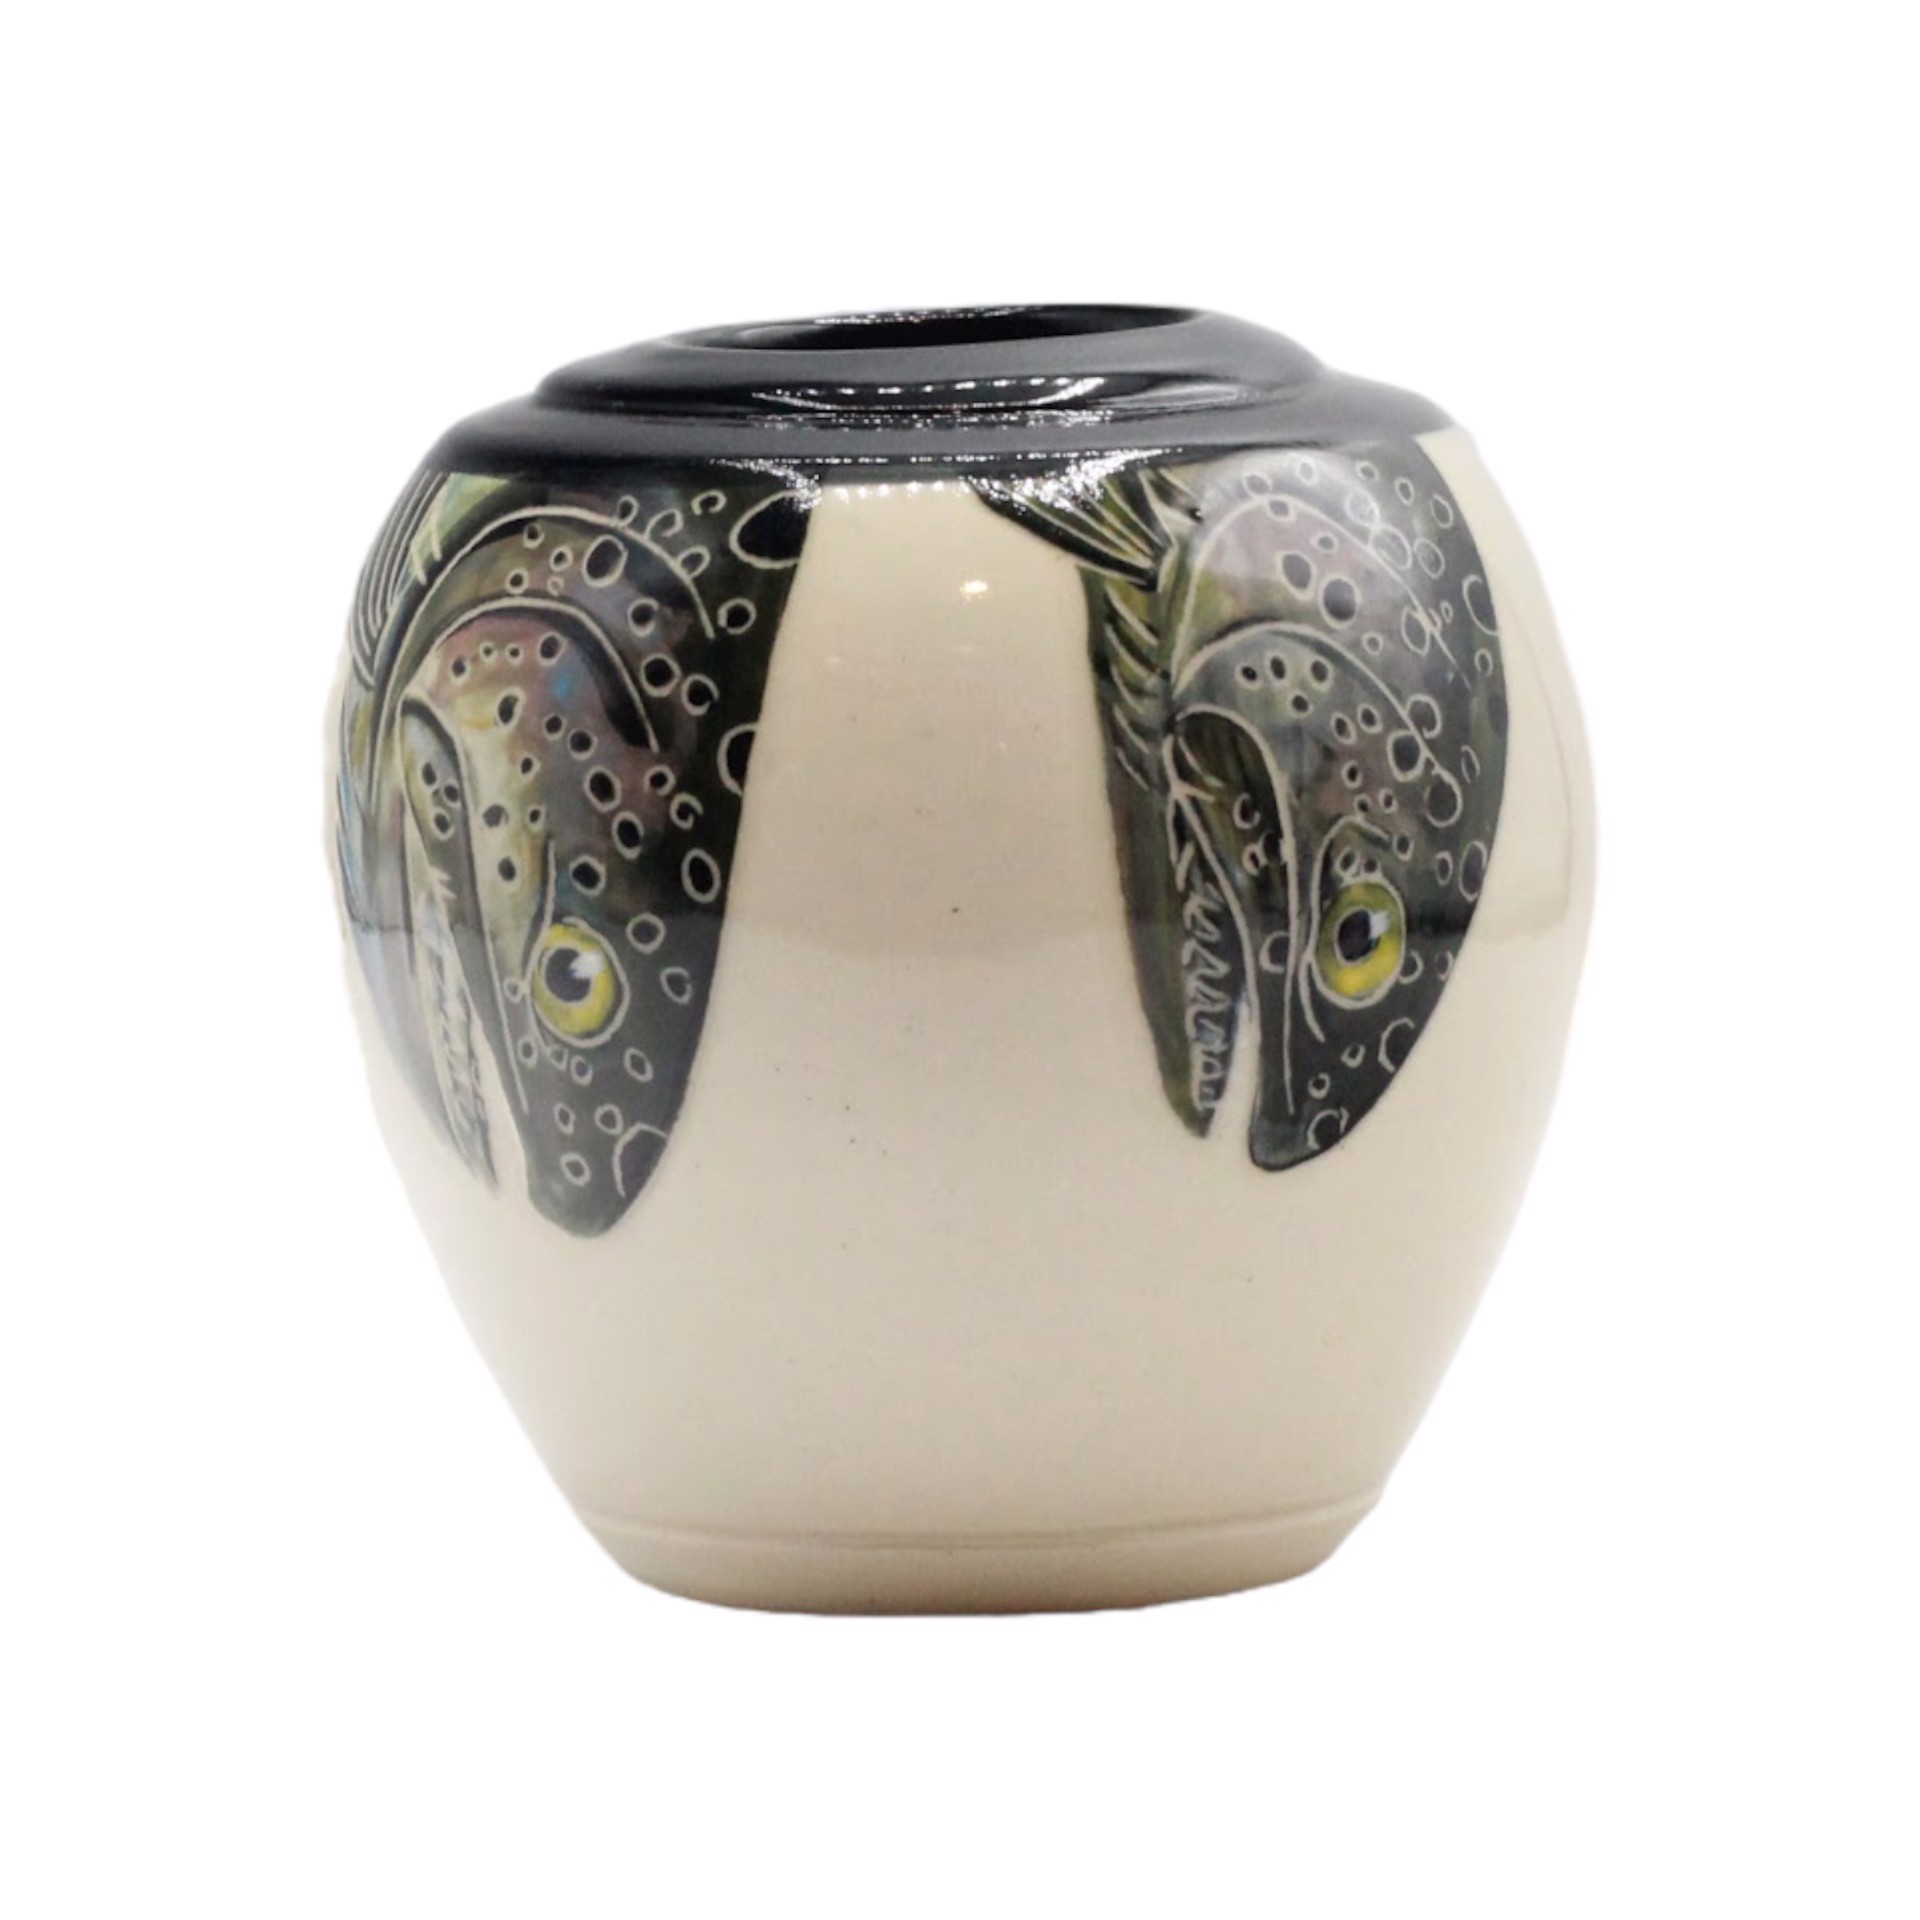 Small Trout Vase by Kim Filiaggi & Elizabeth Schowachert